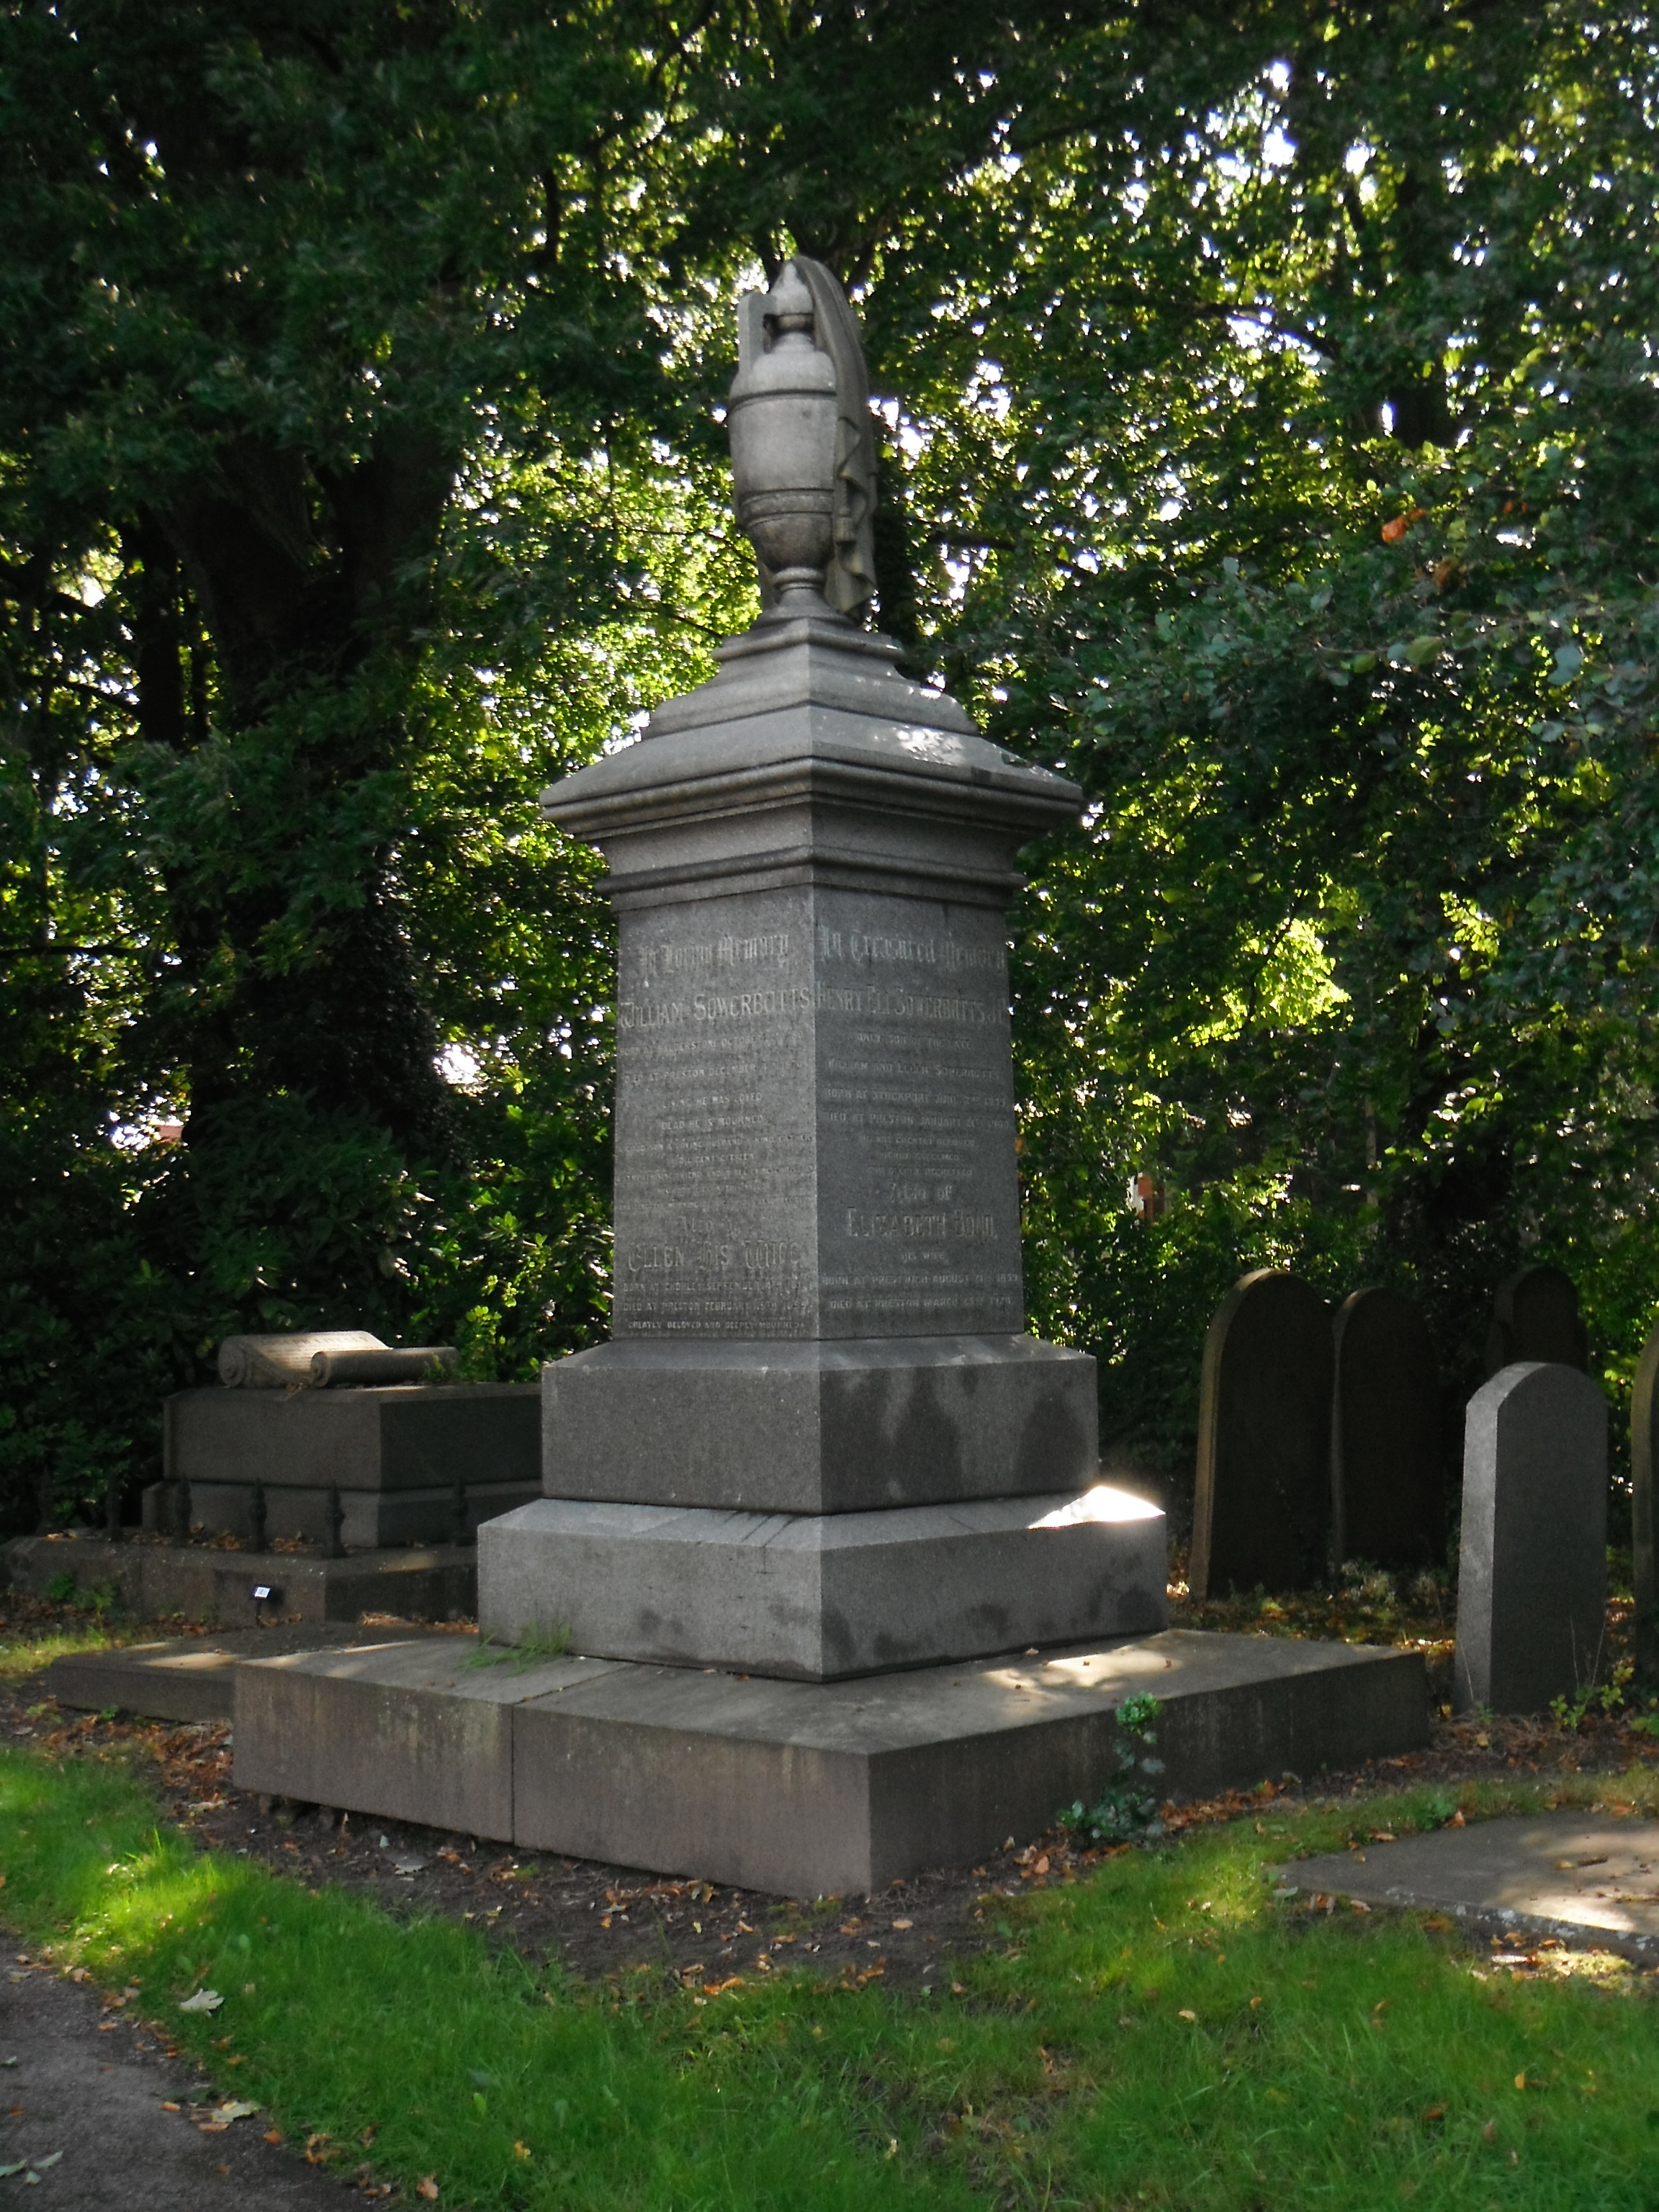 Photo taken by me -  grave marker, Preston Cemetery